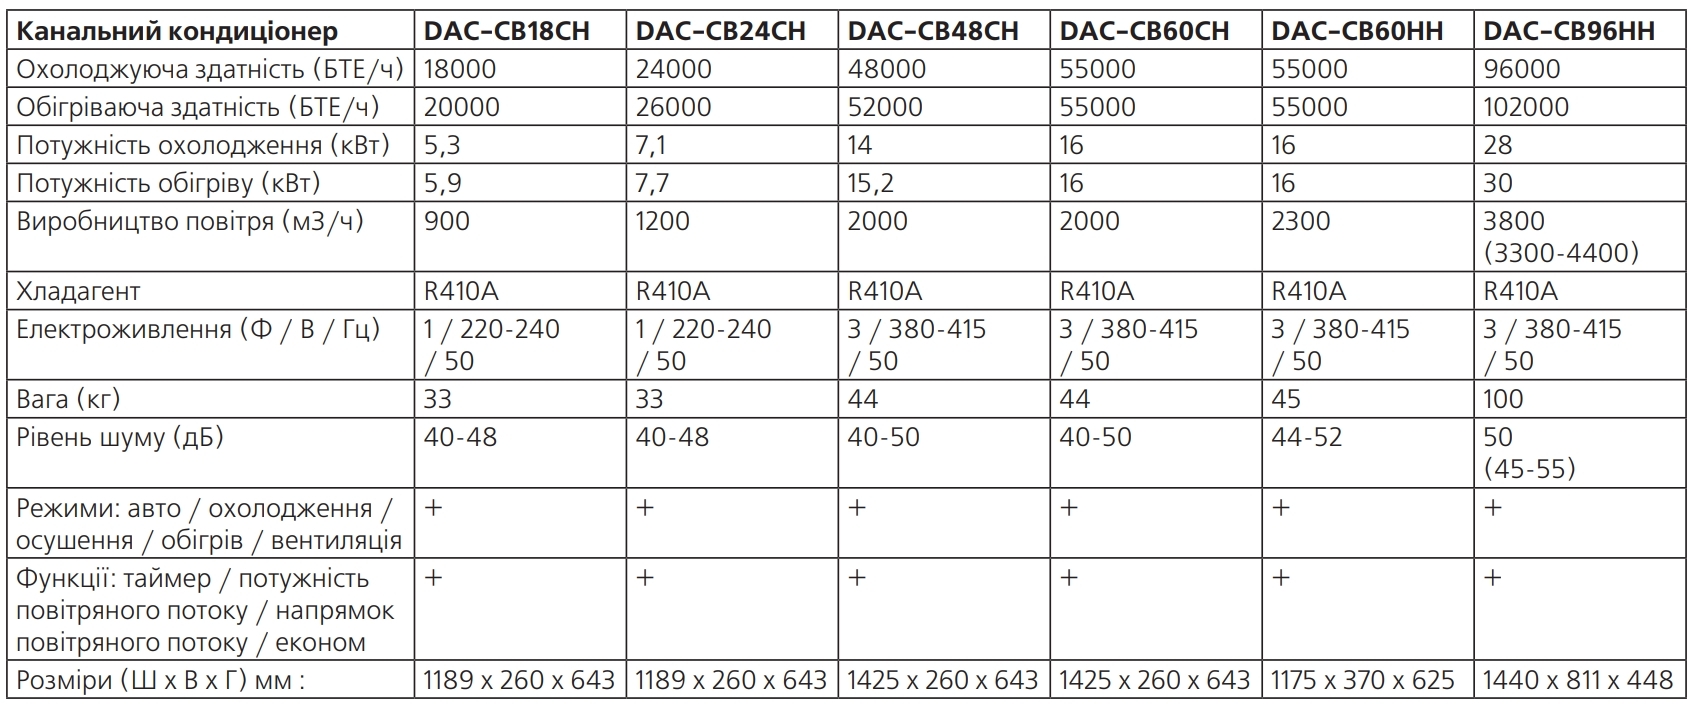 Digital DAC-CB60CH Характеристики